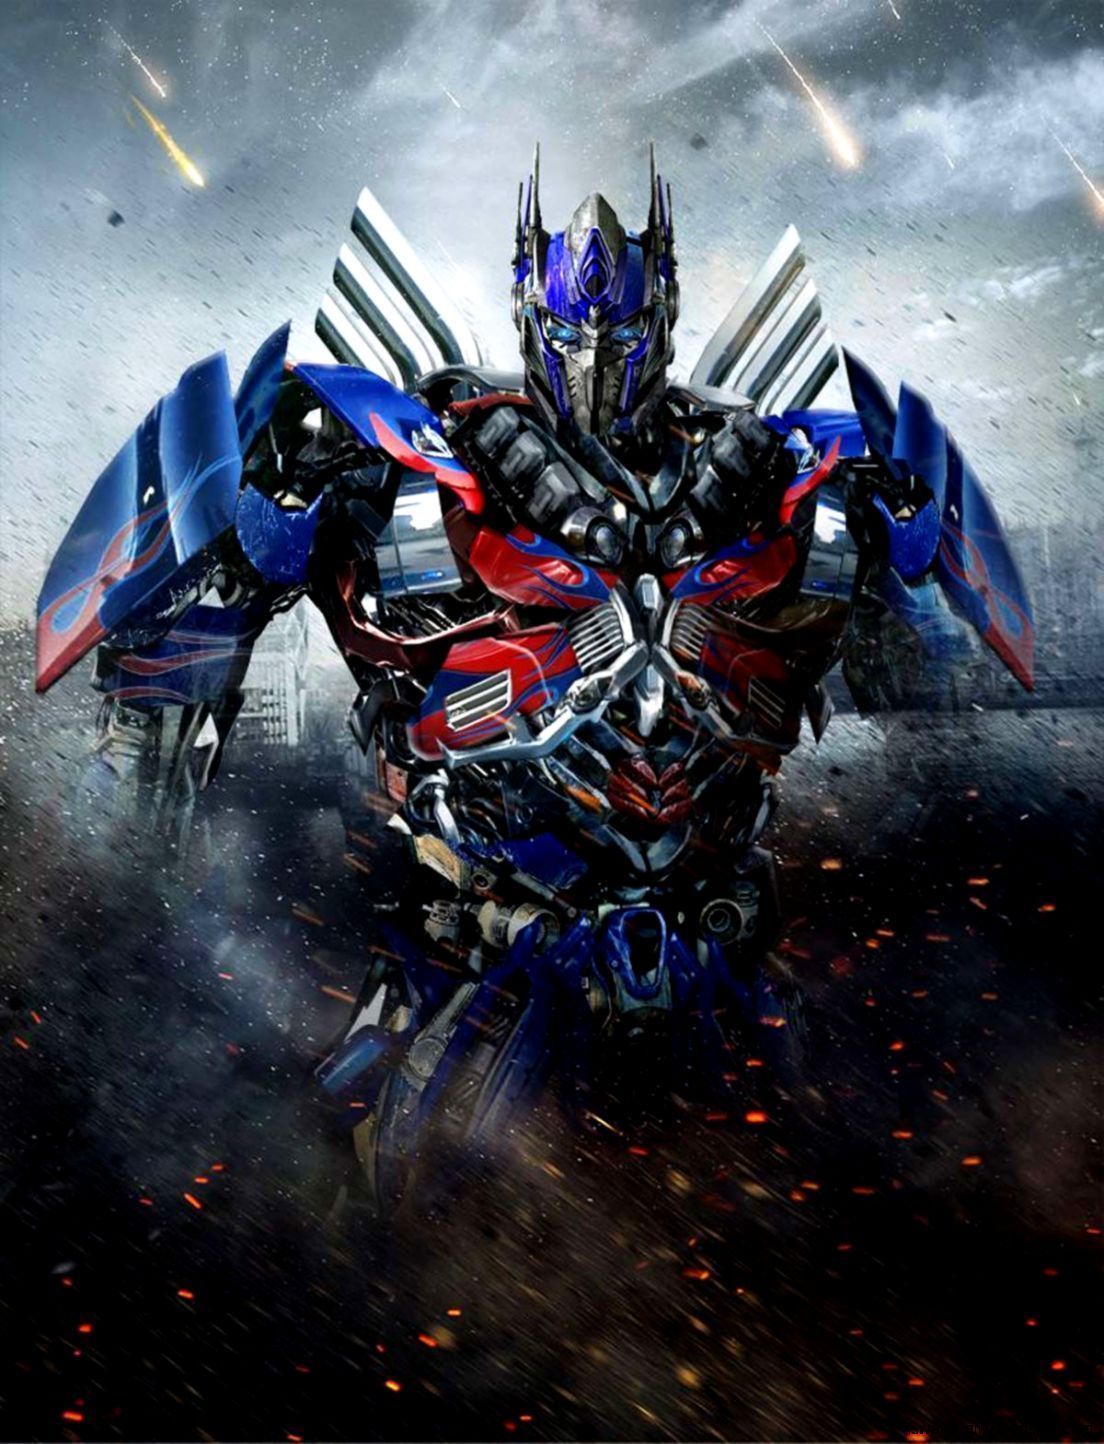 Optimus Prime Transformers 4 Hd Wallpaper Wallpapers Quality